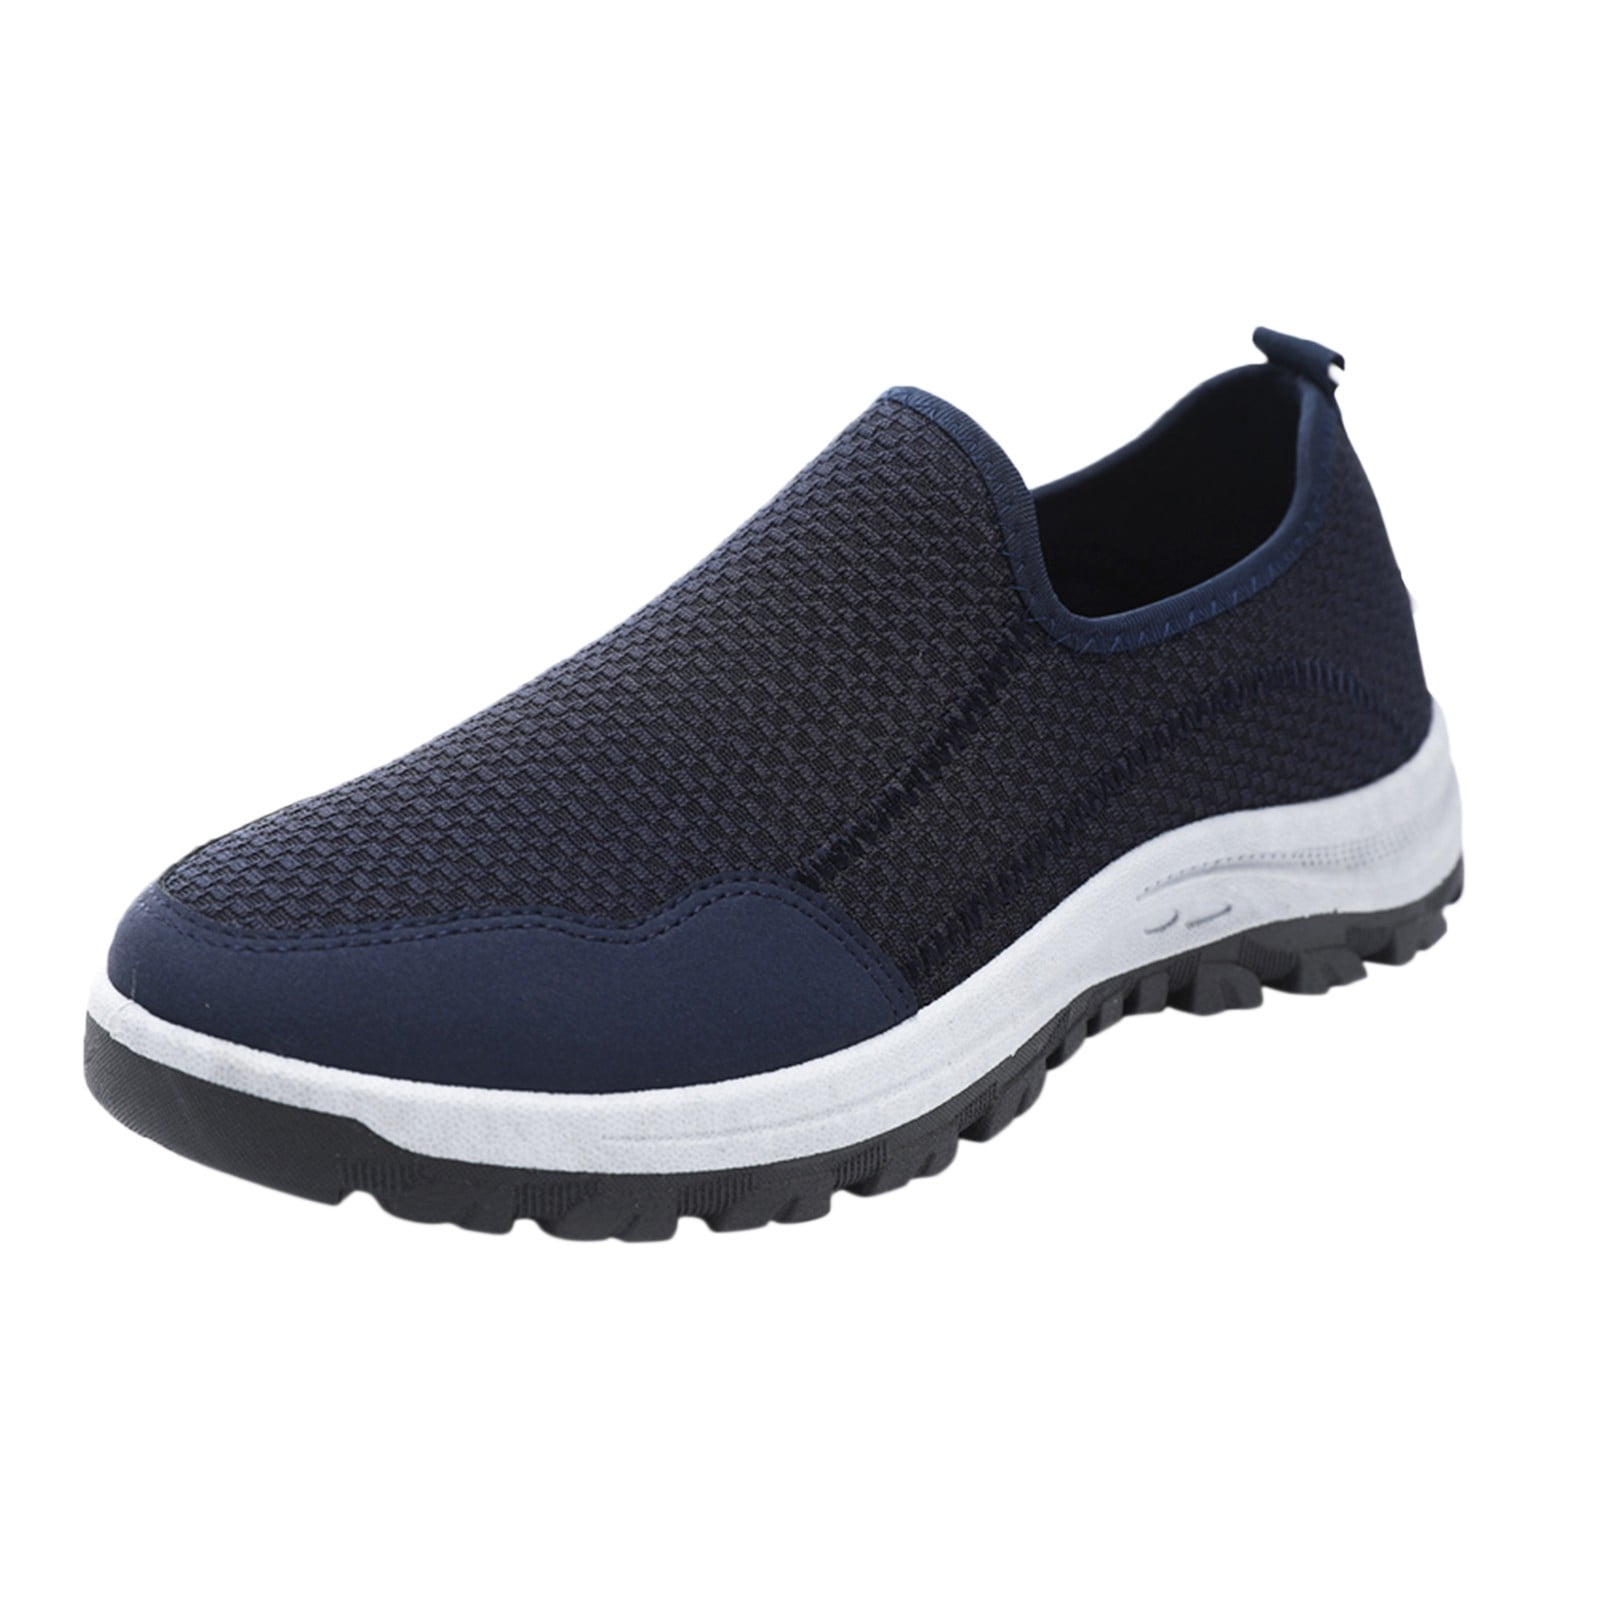  Skechers Men's Max Cushioning Slip-Ins-Athletic Slip-On  Running Walking Shoes with Memory Foam Sneaker, Black, 7